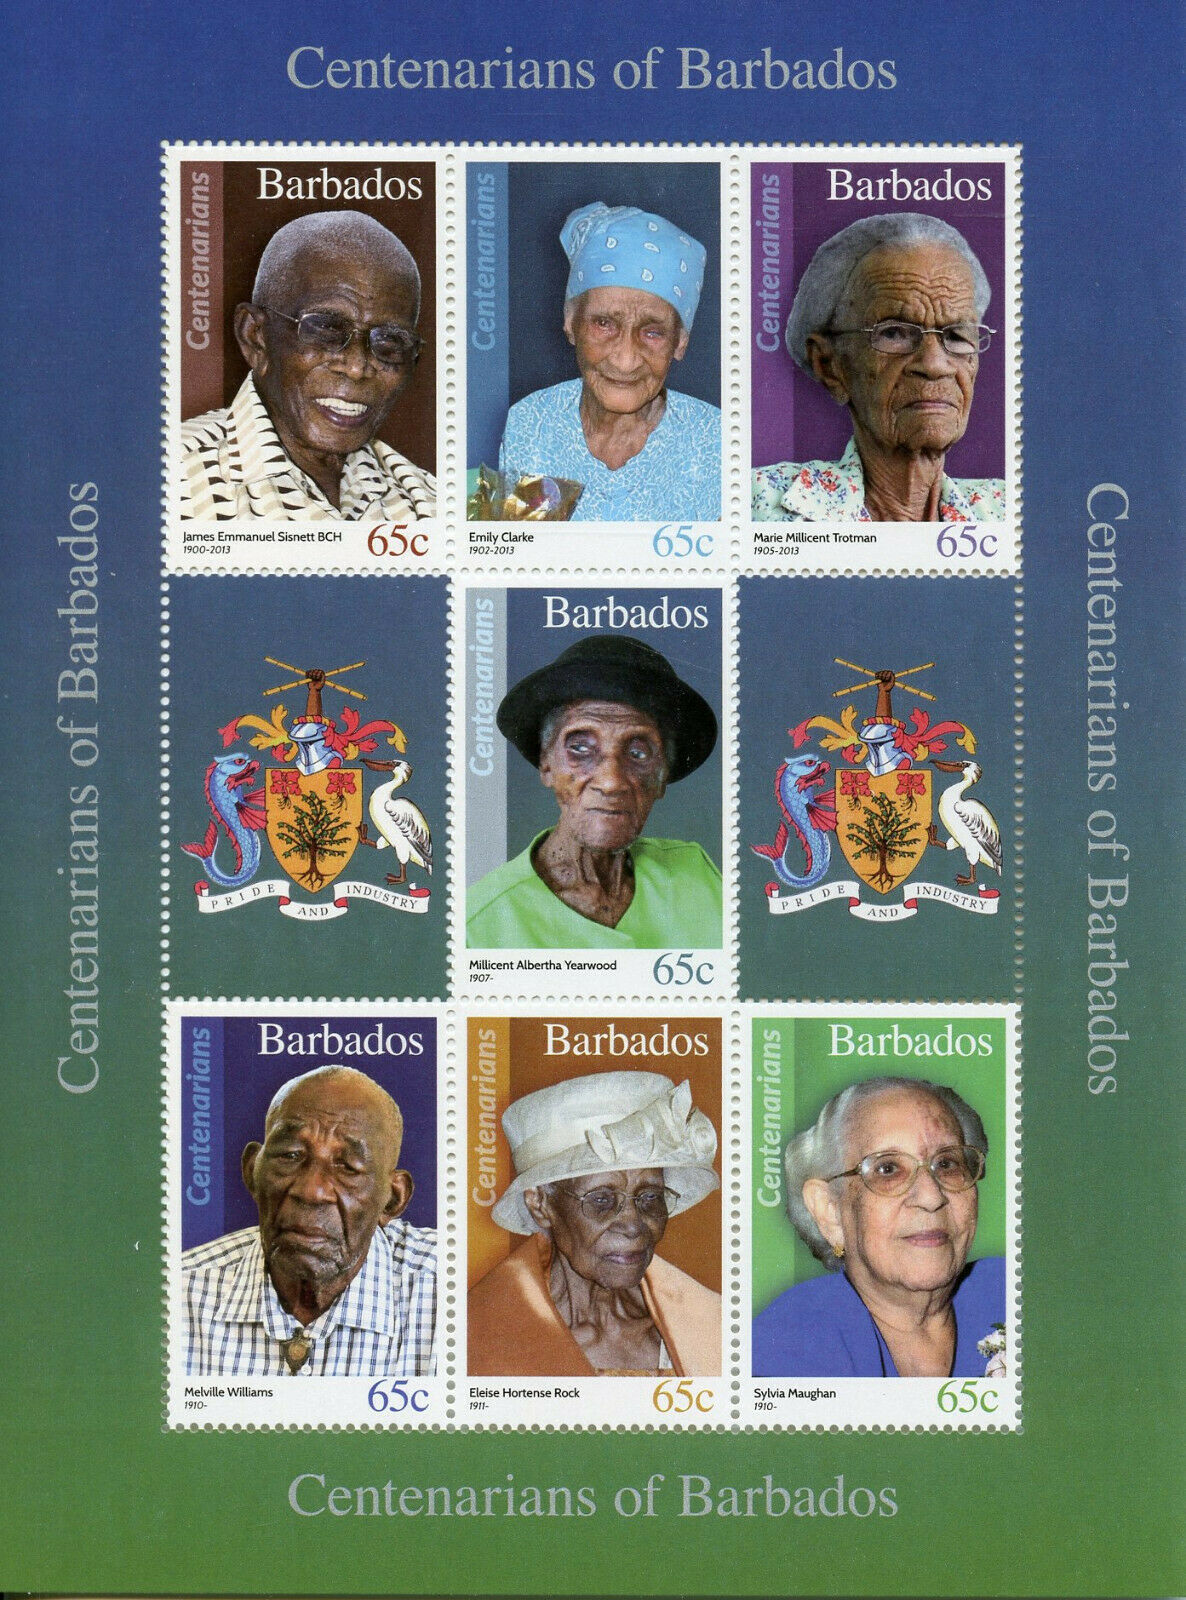 Barbados 2016 MNH People Stamps Super Centenarians of Barbados 7v M/S